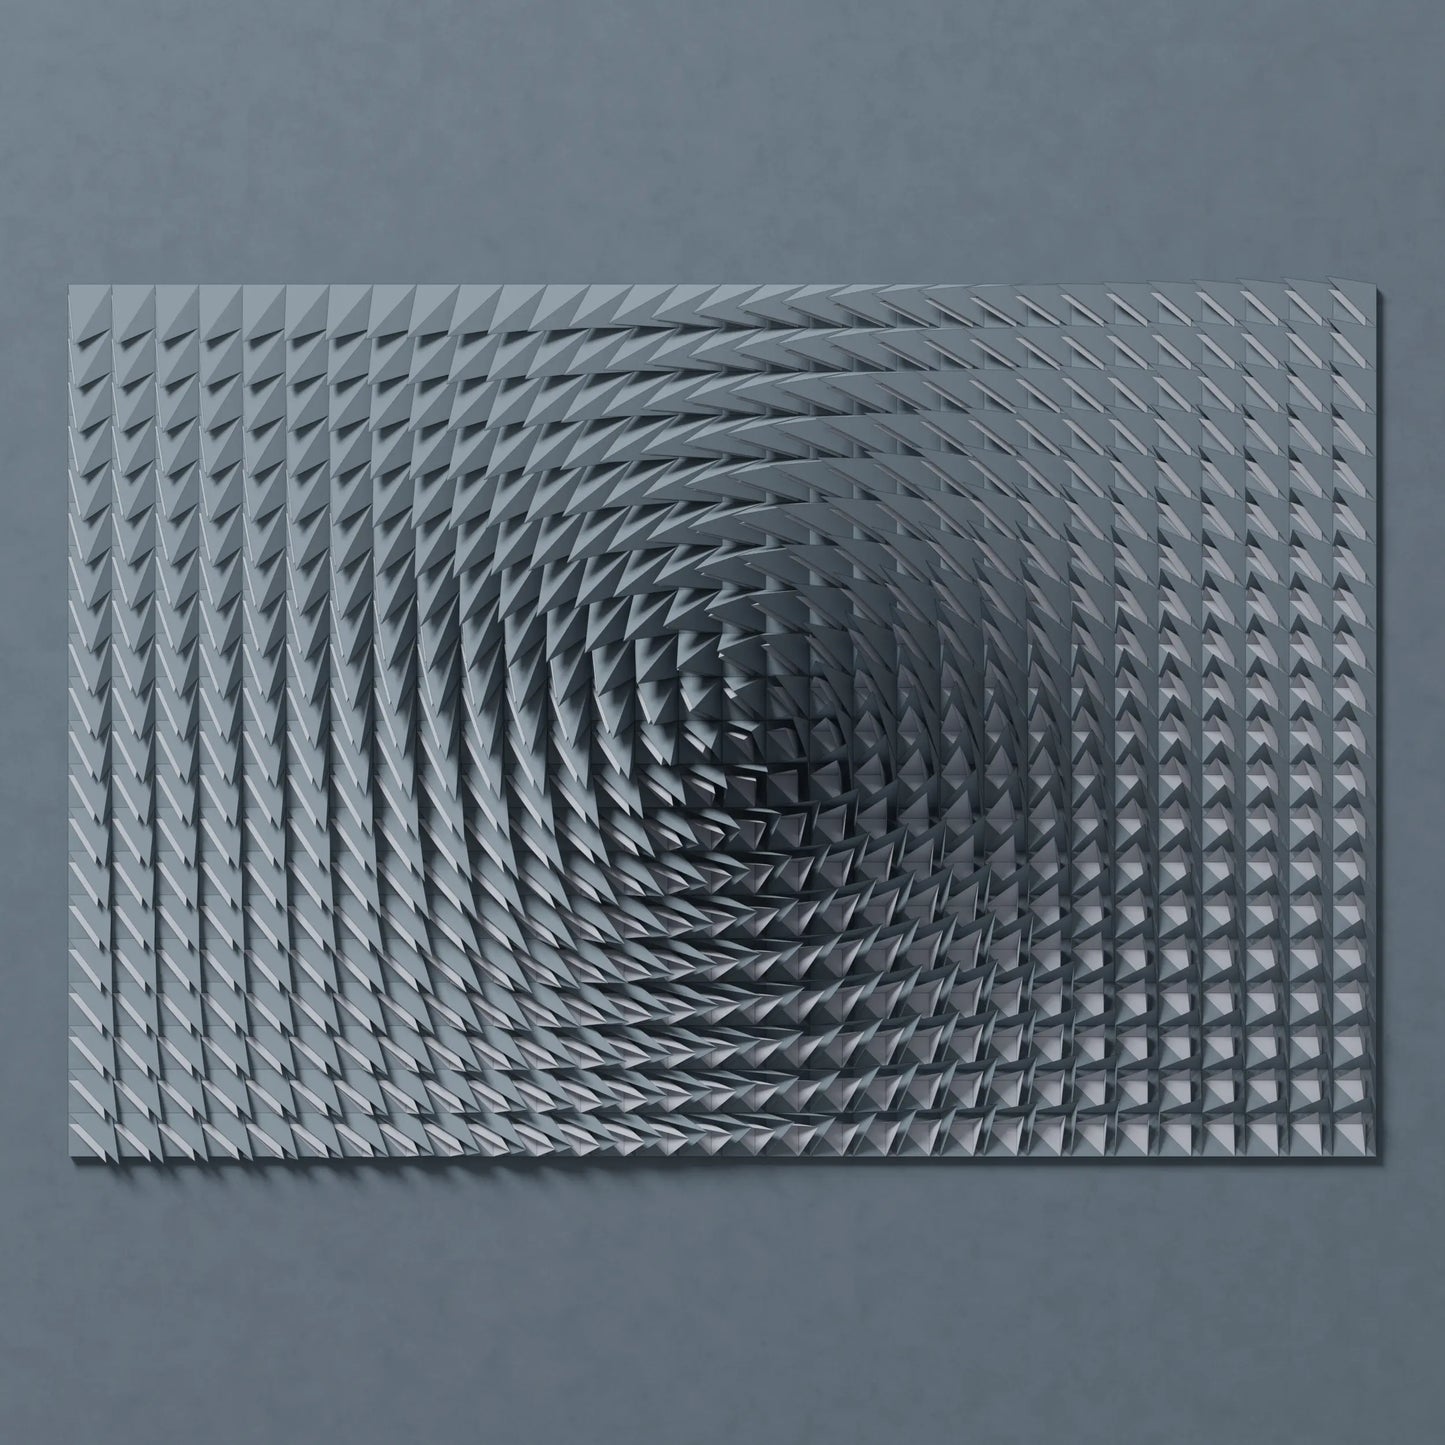 SILVER TWIST - PARAGAMI 14_04 - TEMPLATE for 3D HANDMADE PAPER WALL ART_ PARAMETRIC DESIGN Paragami 